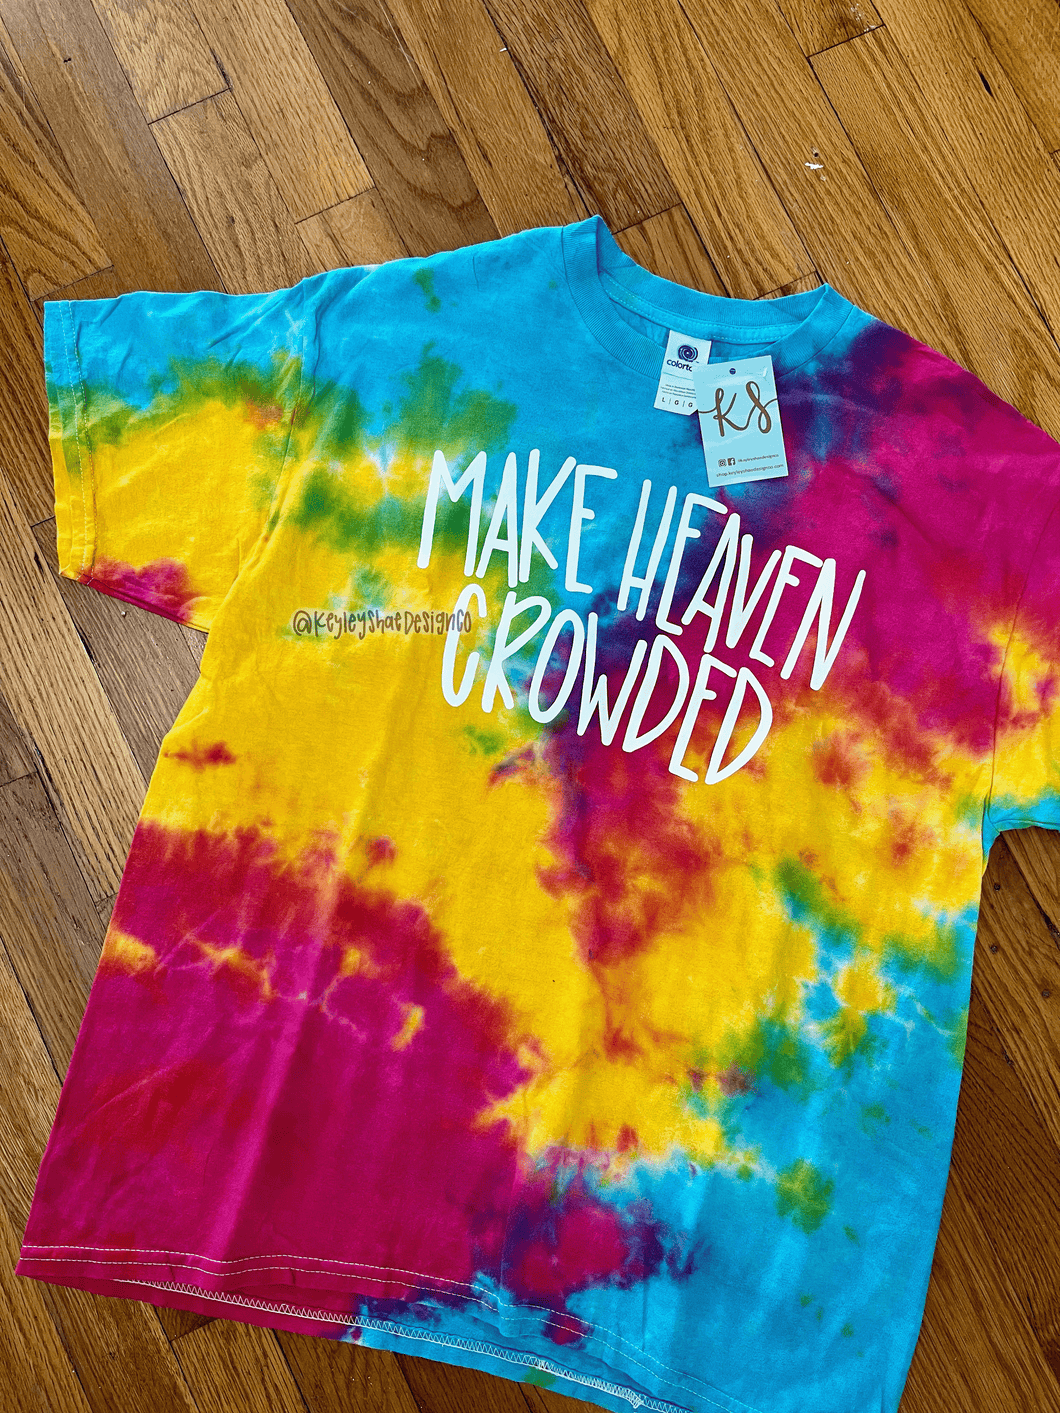 Rainbow Tie Dye - Make Heaven Crowded